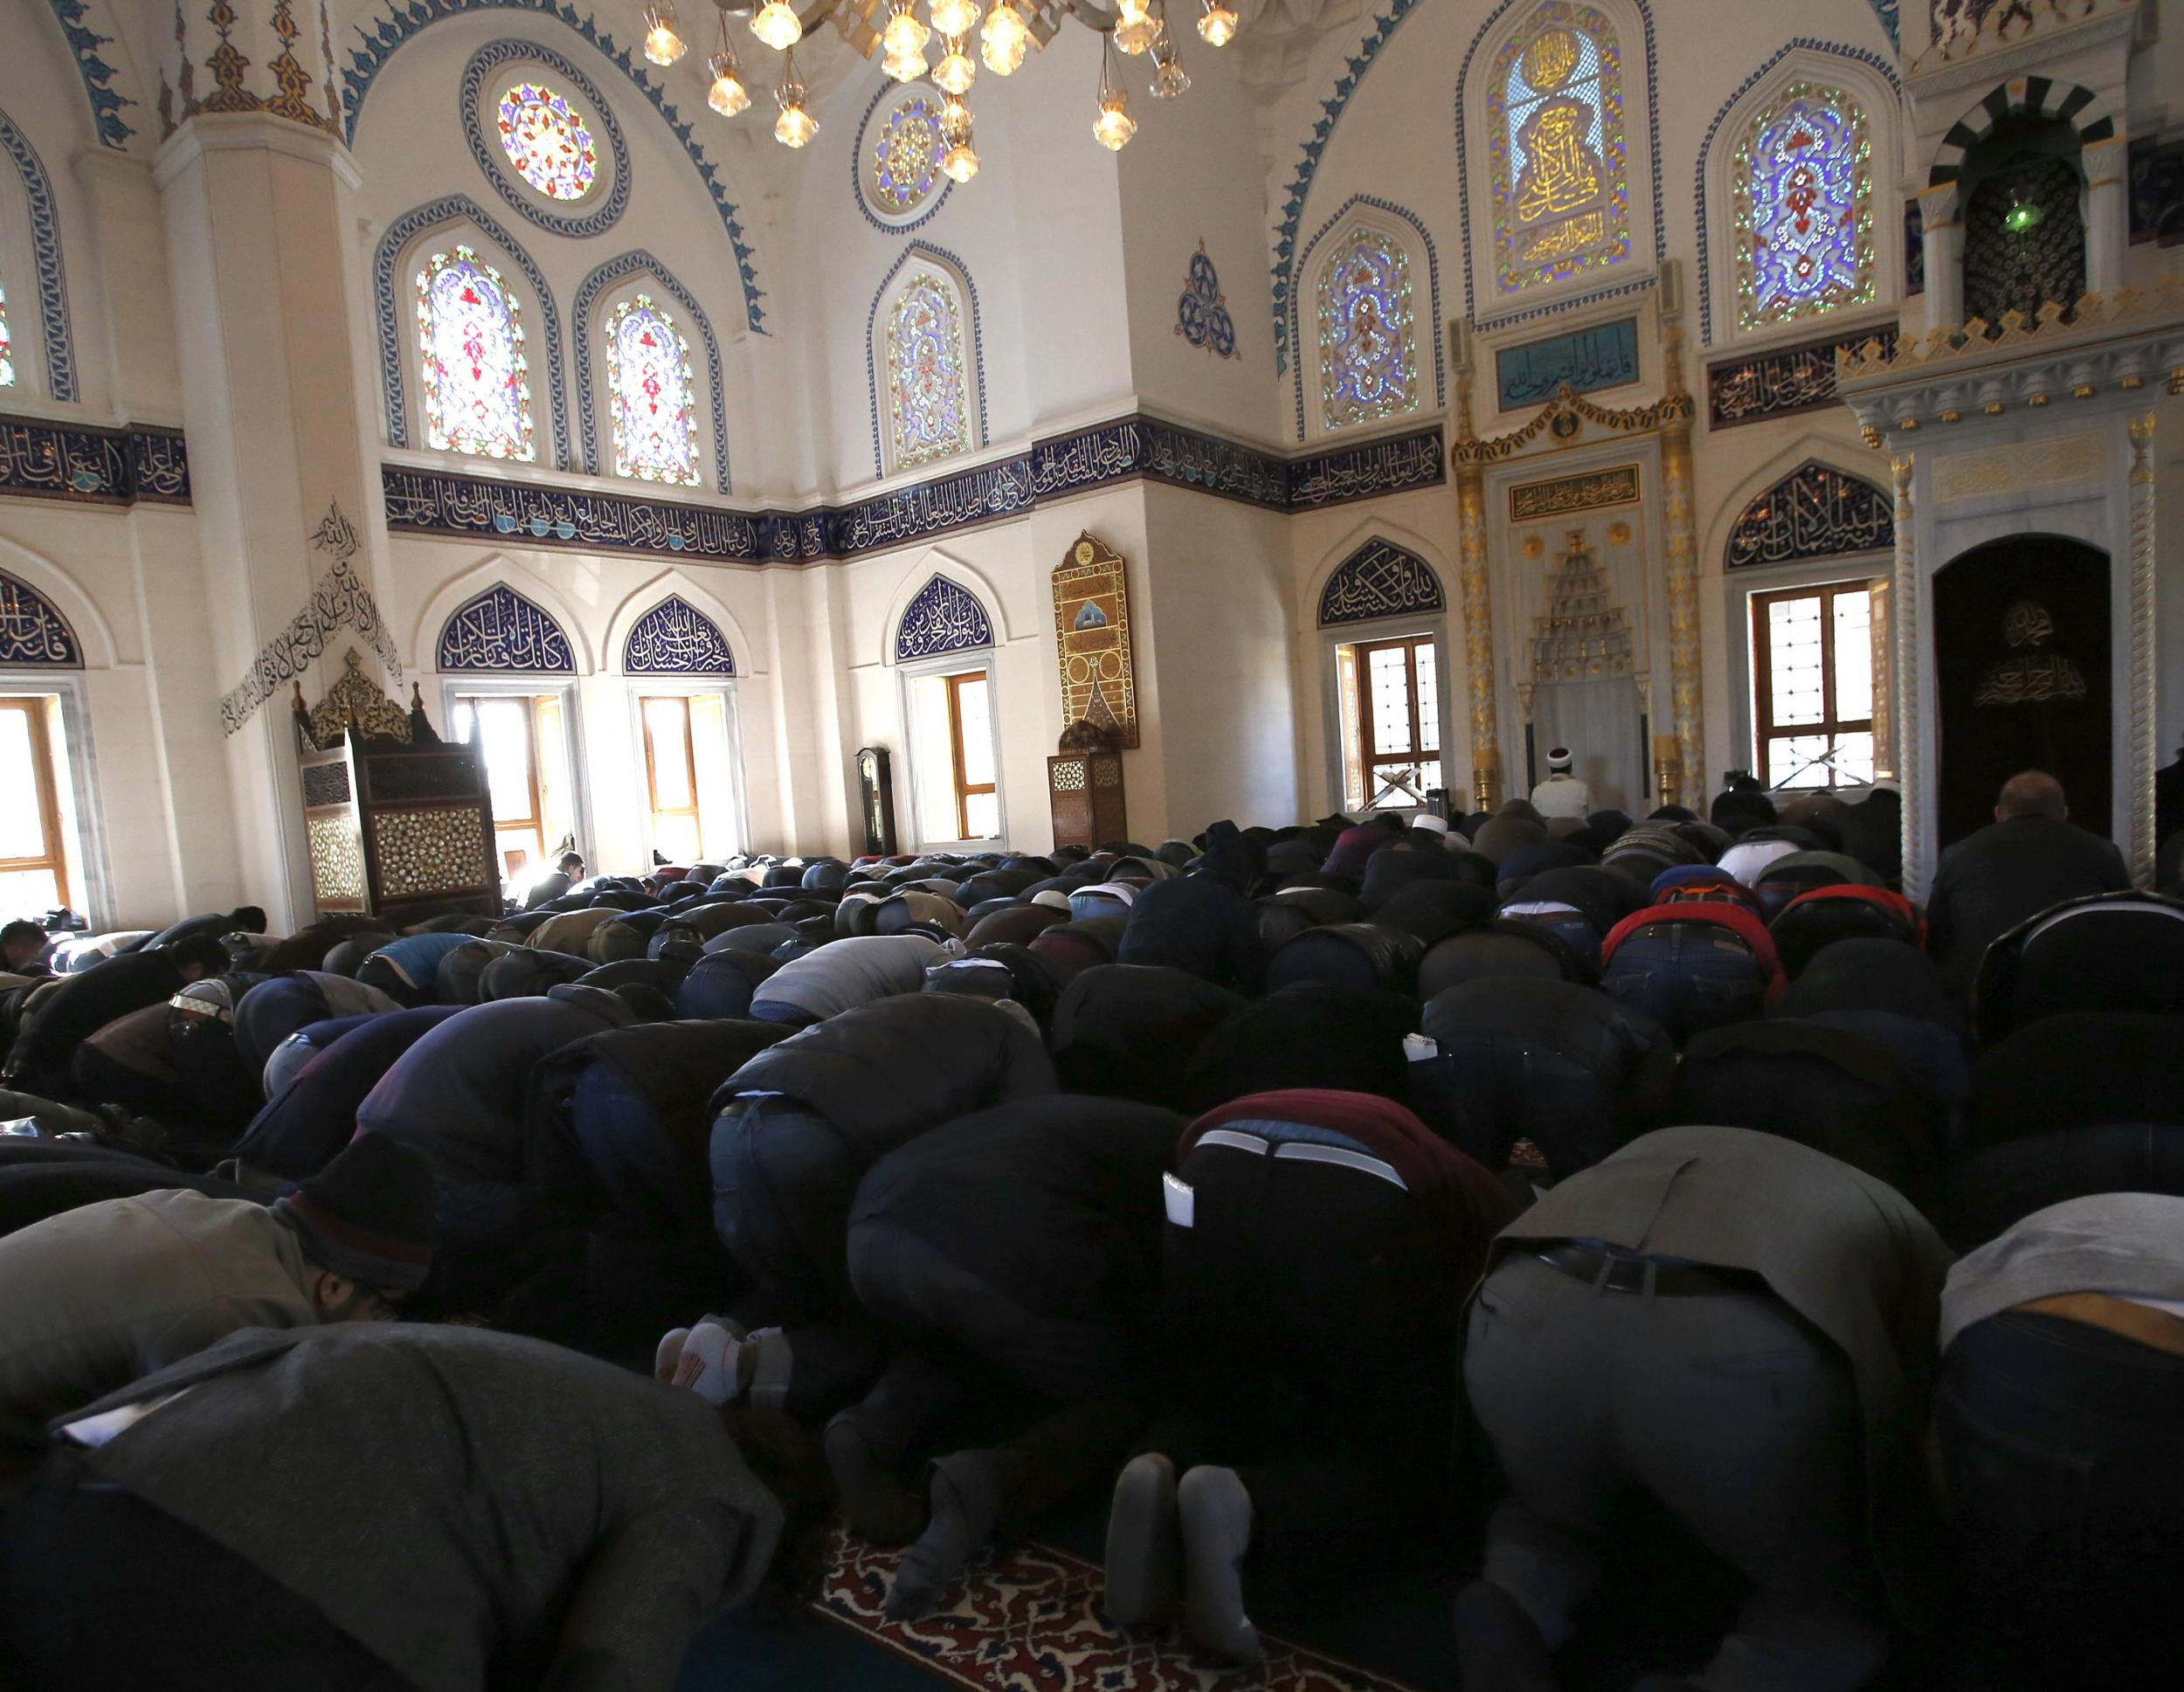 http://static.independent.co.uk/s3fs-public/thumbnails/image/2016/06/29/17/japan-muslims-pray-japanese-.jpg